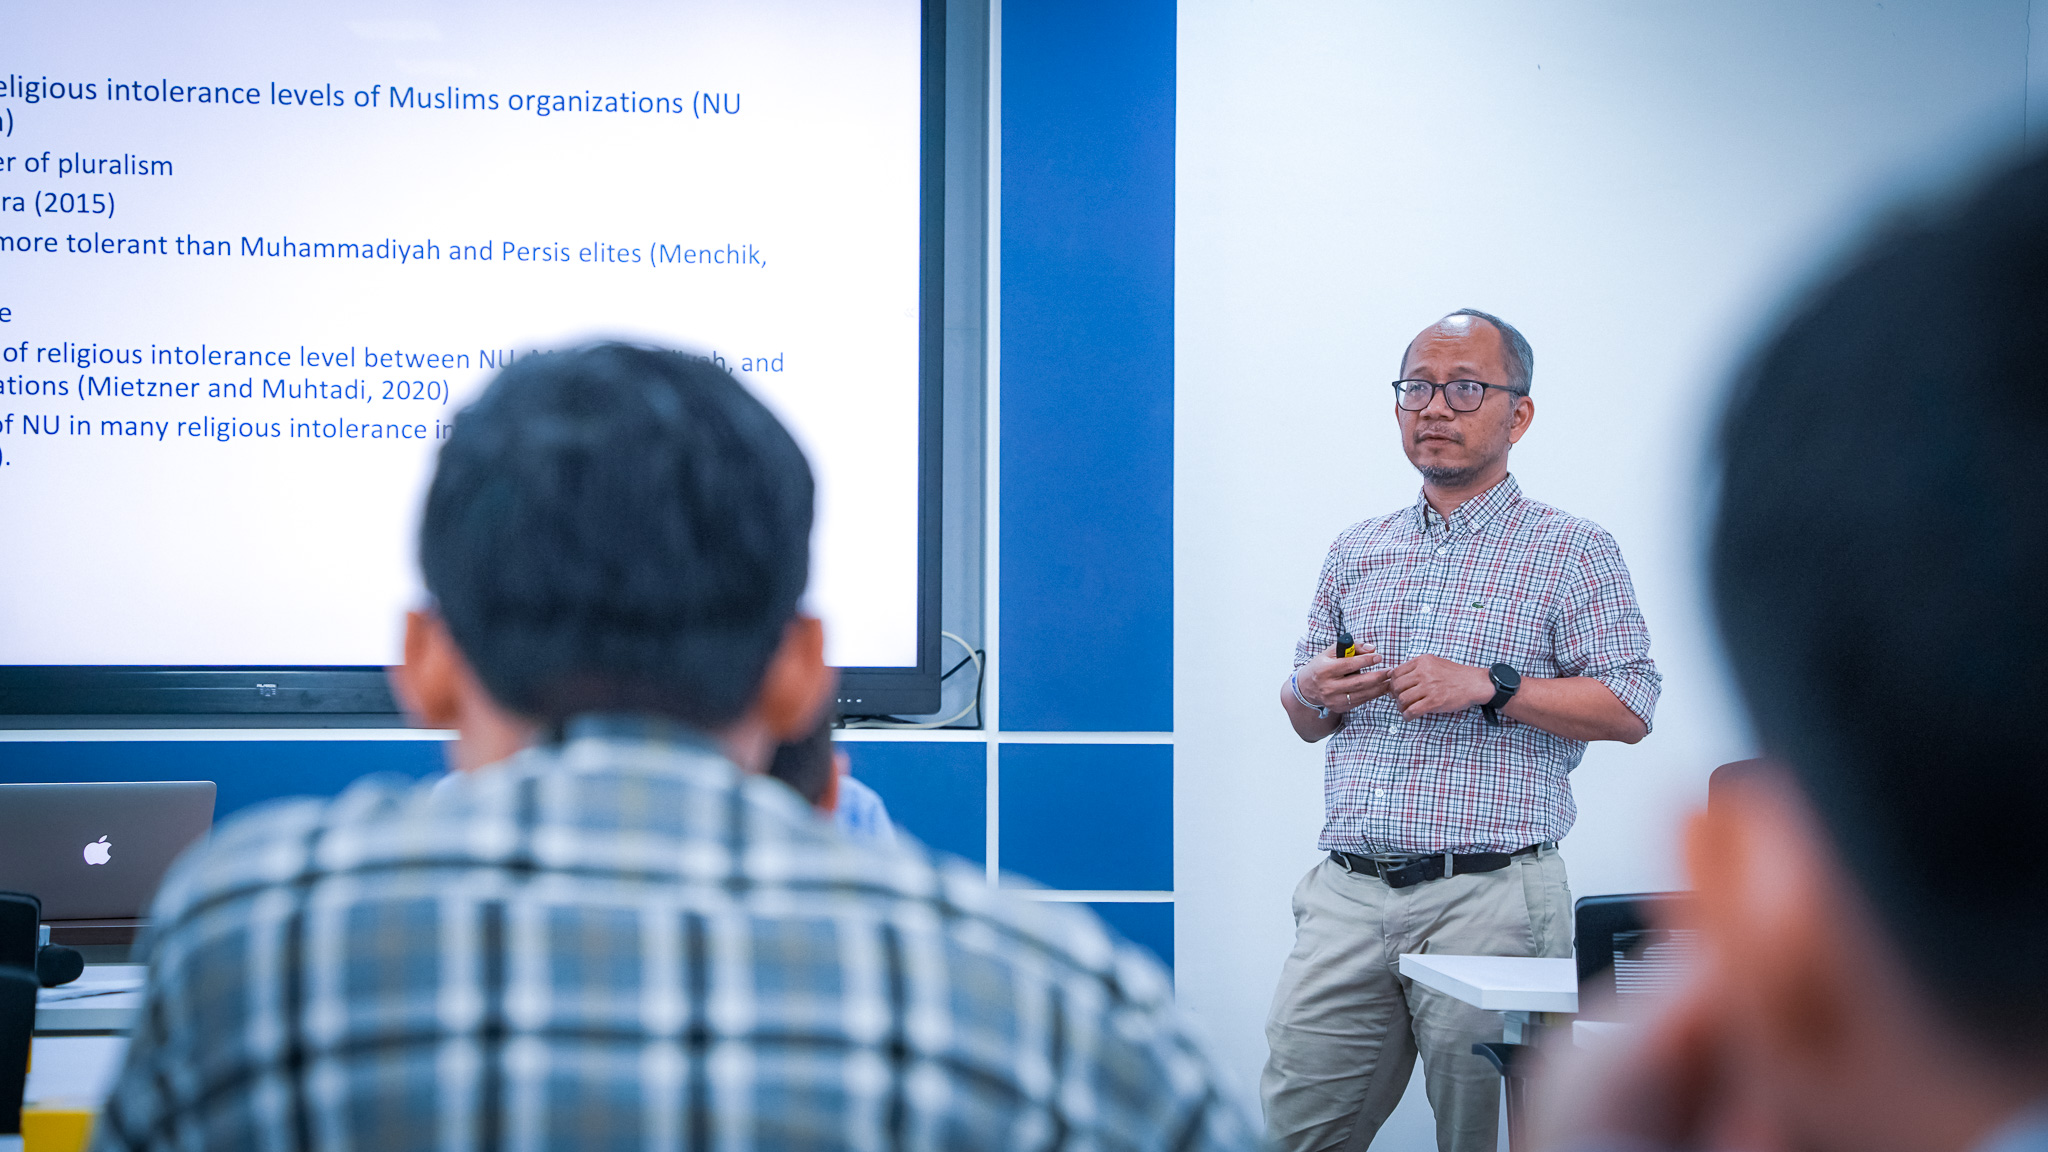 Exploring Religious Intolerance in Indonesia: Dr. Akhmad Rizal Shidiq's Lecture Provides In-Depth Understanding